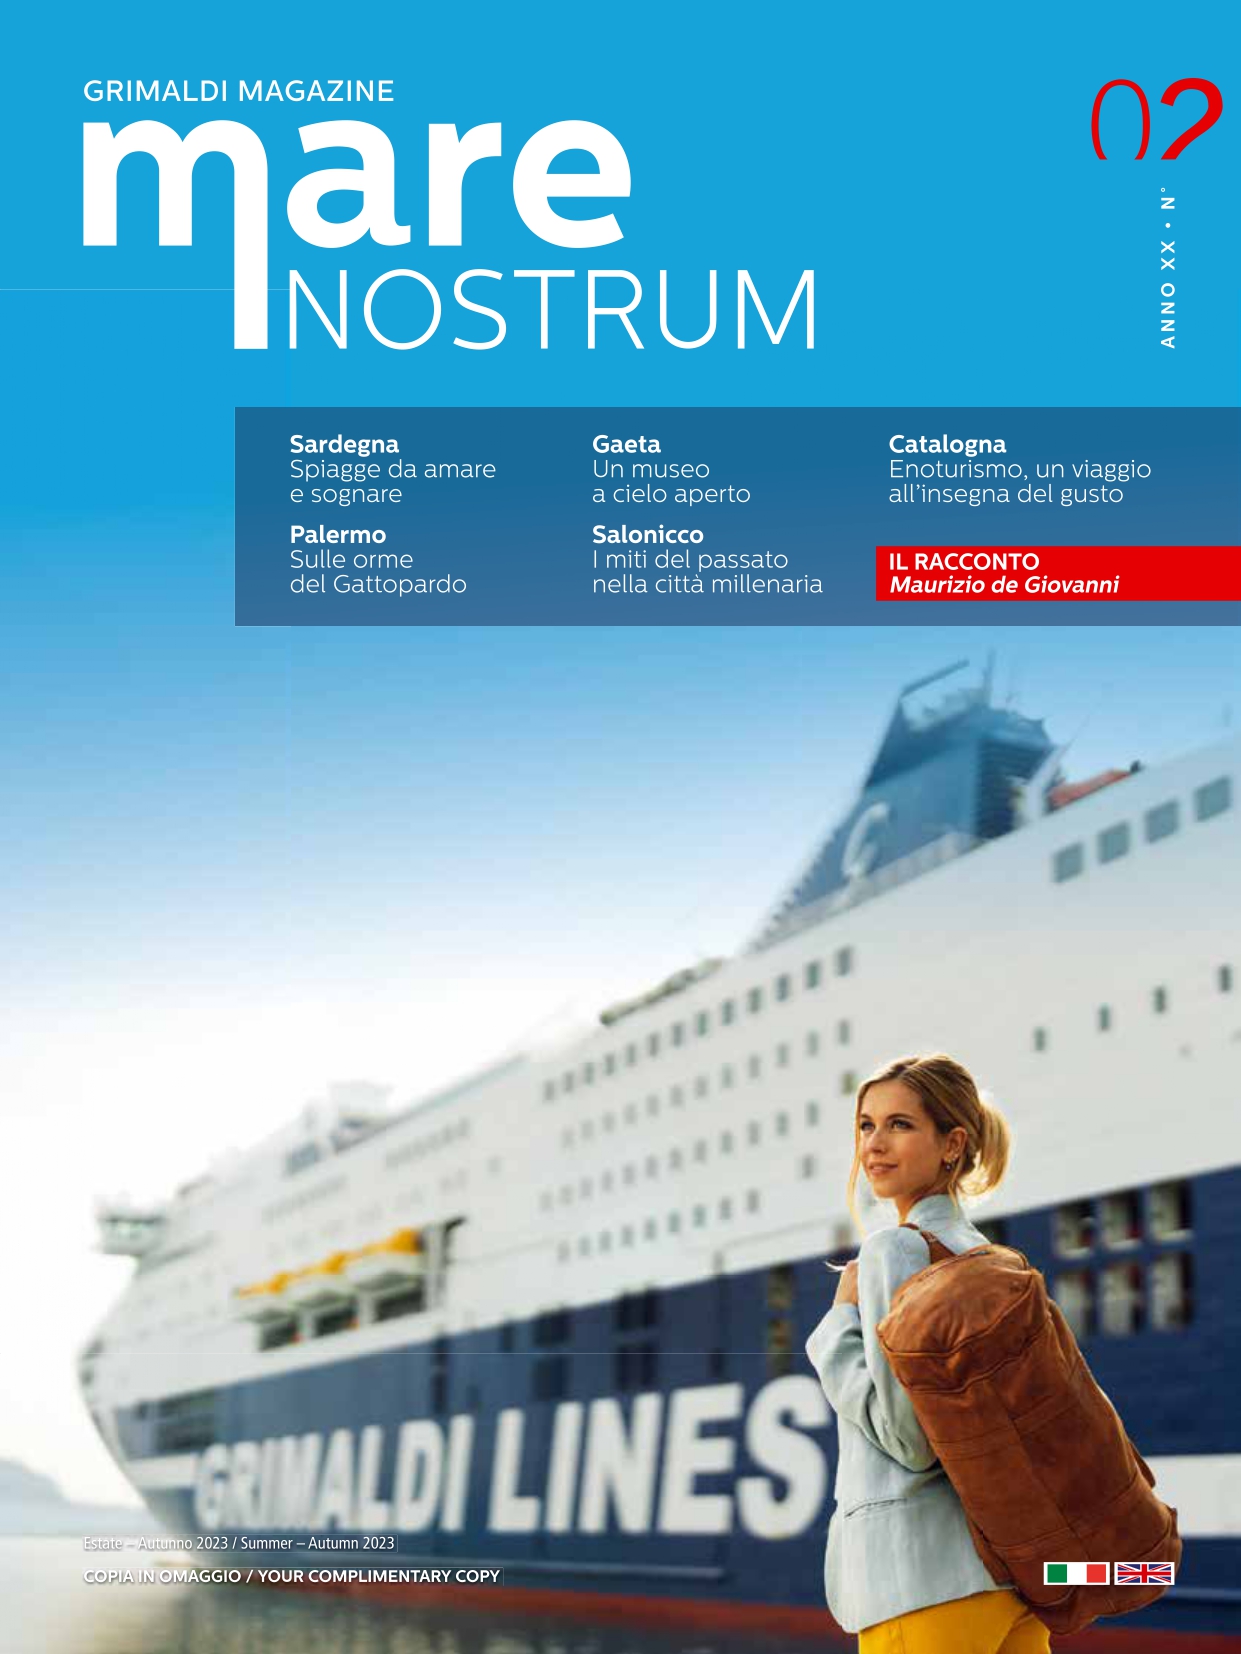 Grimaldi Magazine Mare Nostrum (Year XX n. 2) Italian-English